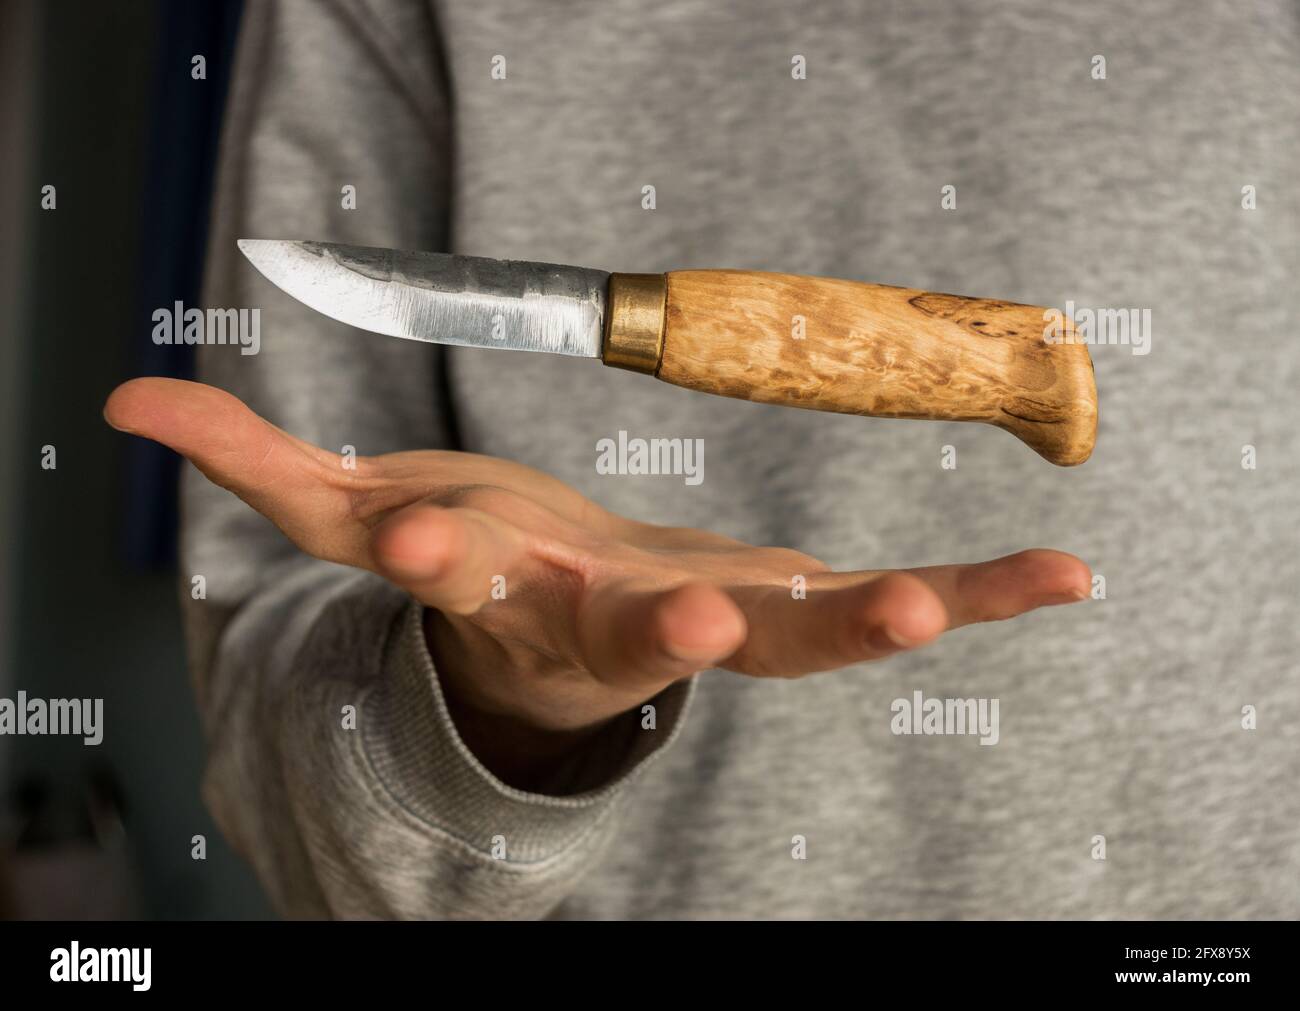 Floating nordic knife Stock Photo - Alamy